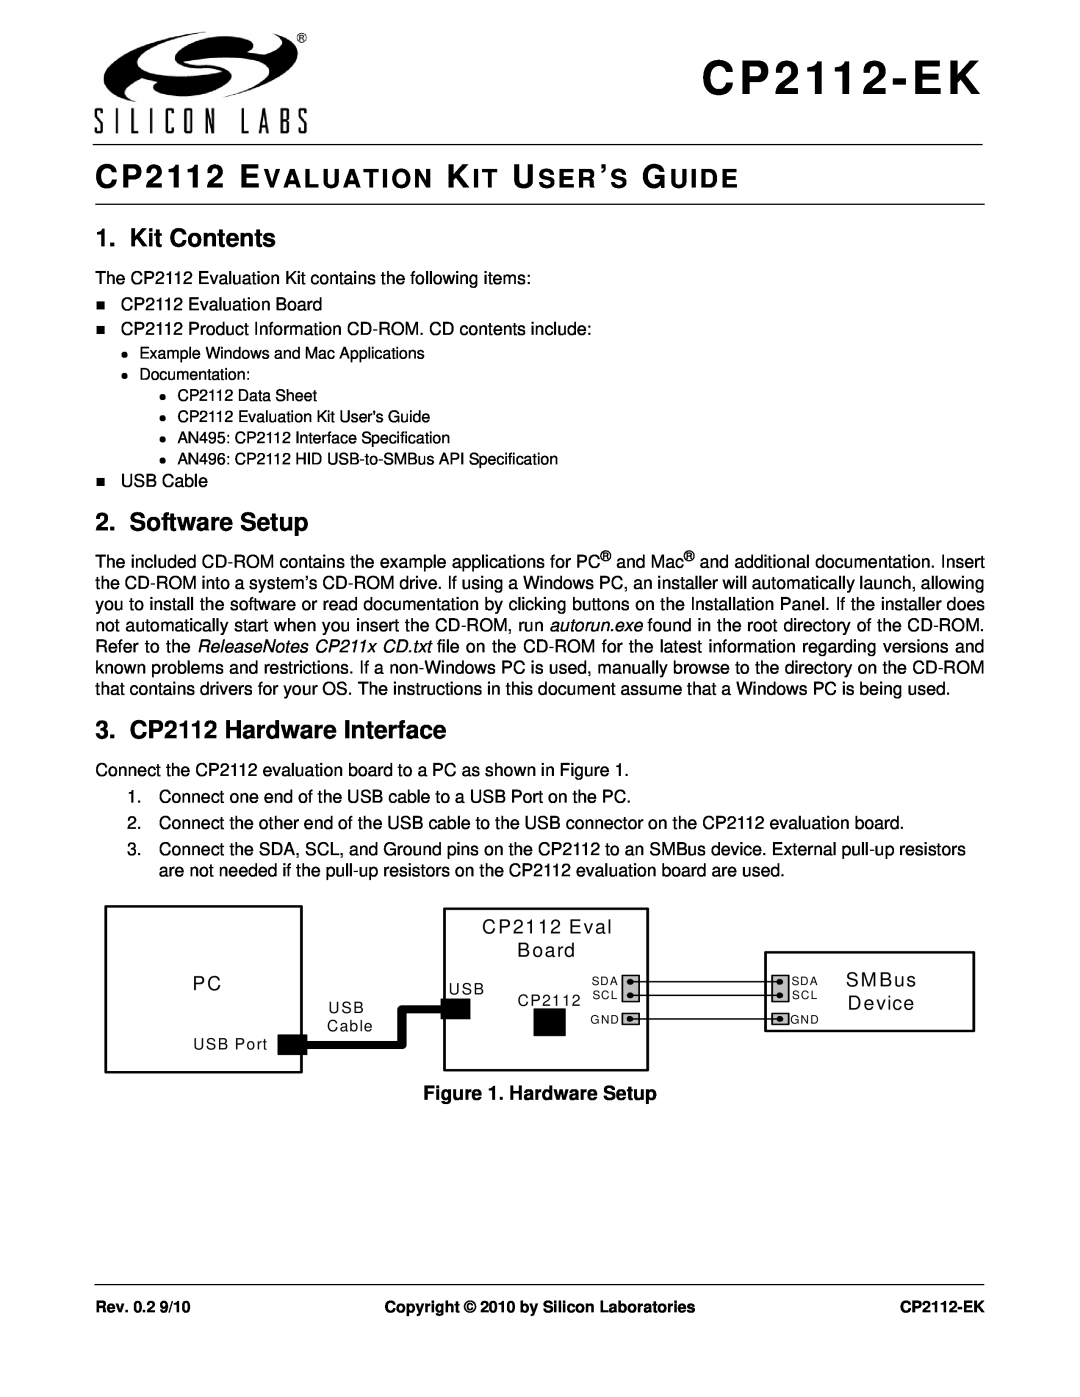 Silicon Laboratories CP2112-EK manual CP2112 EVALUATION KIT USER ’S GUIDE 1. Kit Contents, Software Setup, Hardware Setup 